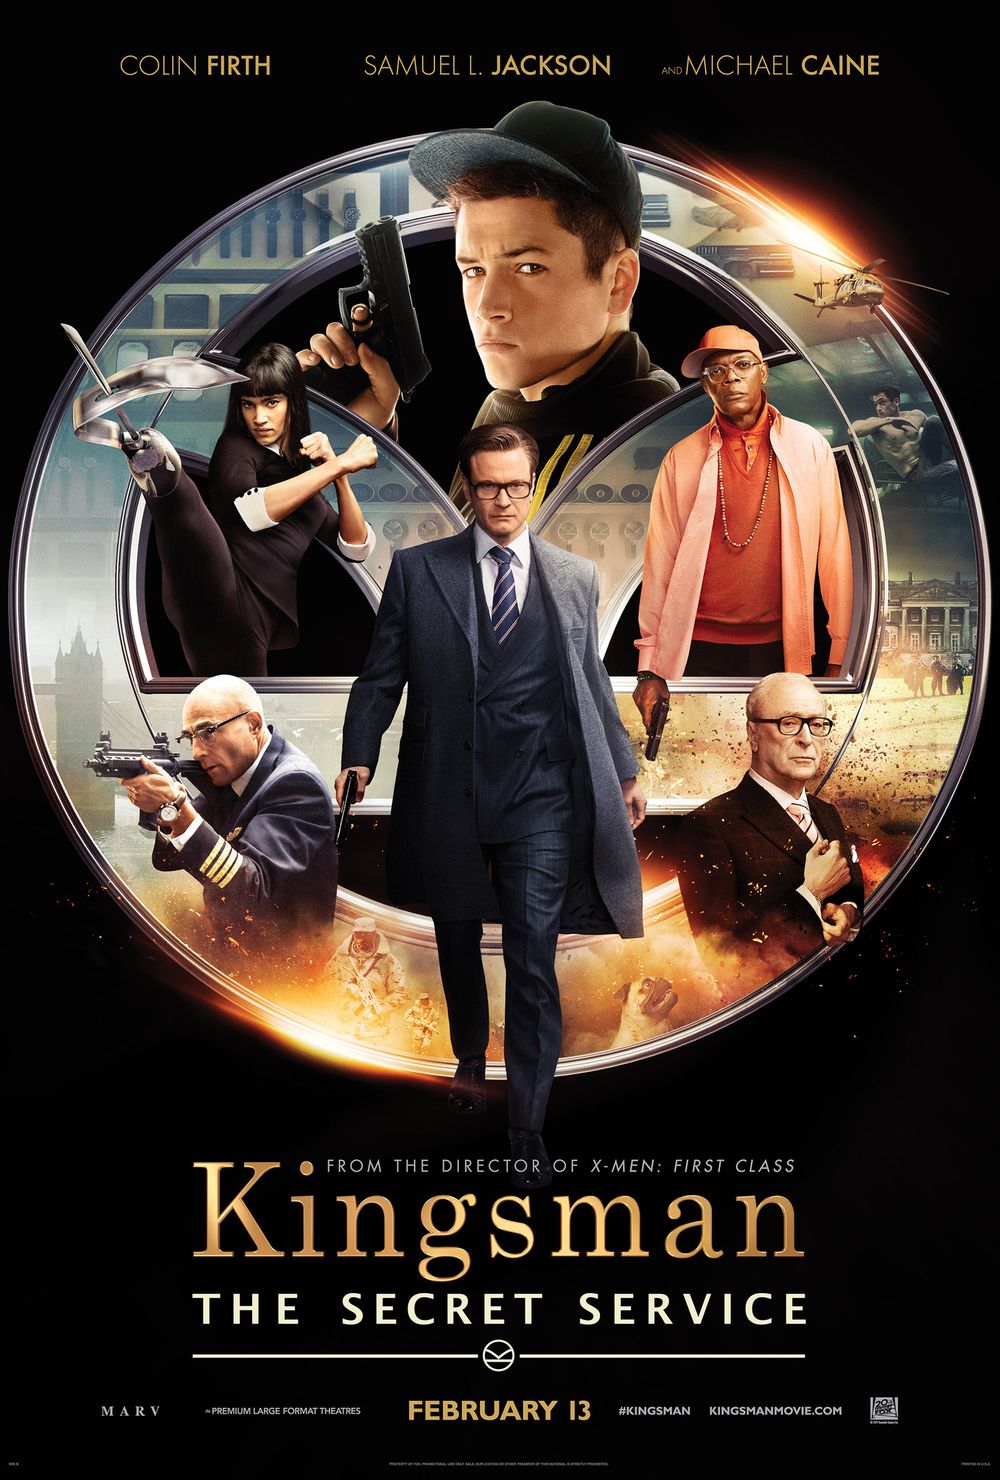 Kingsman The Secret Service poster.jpg